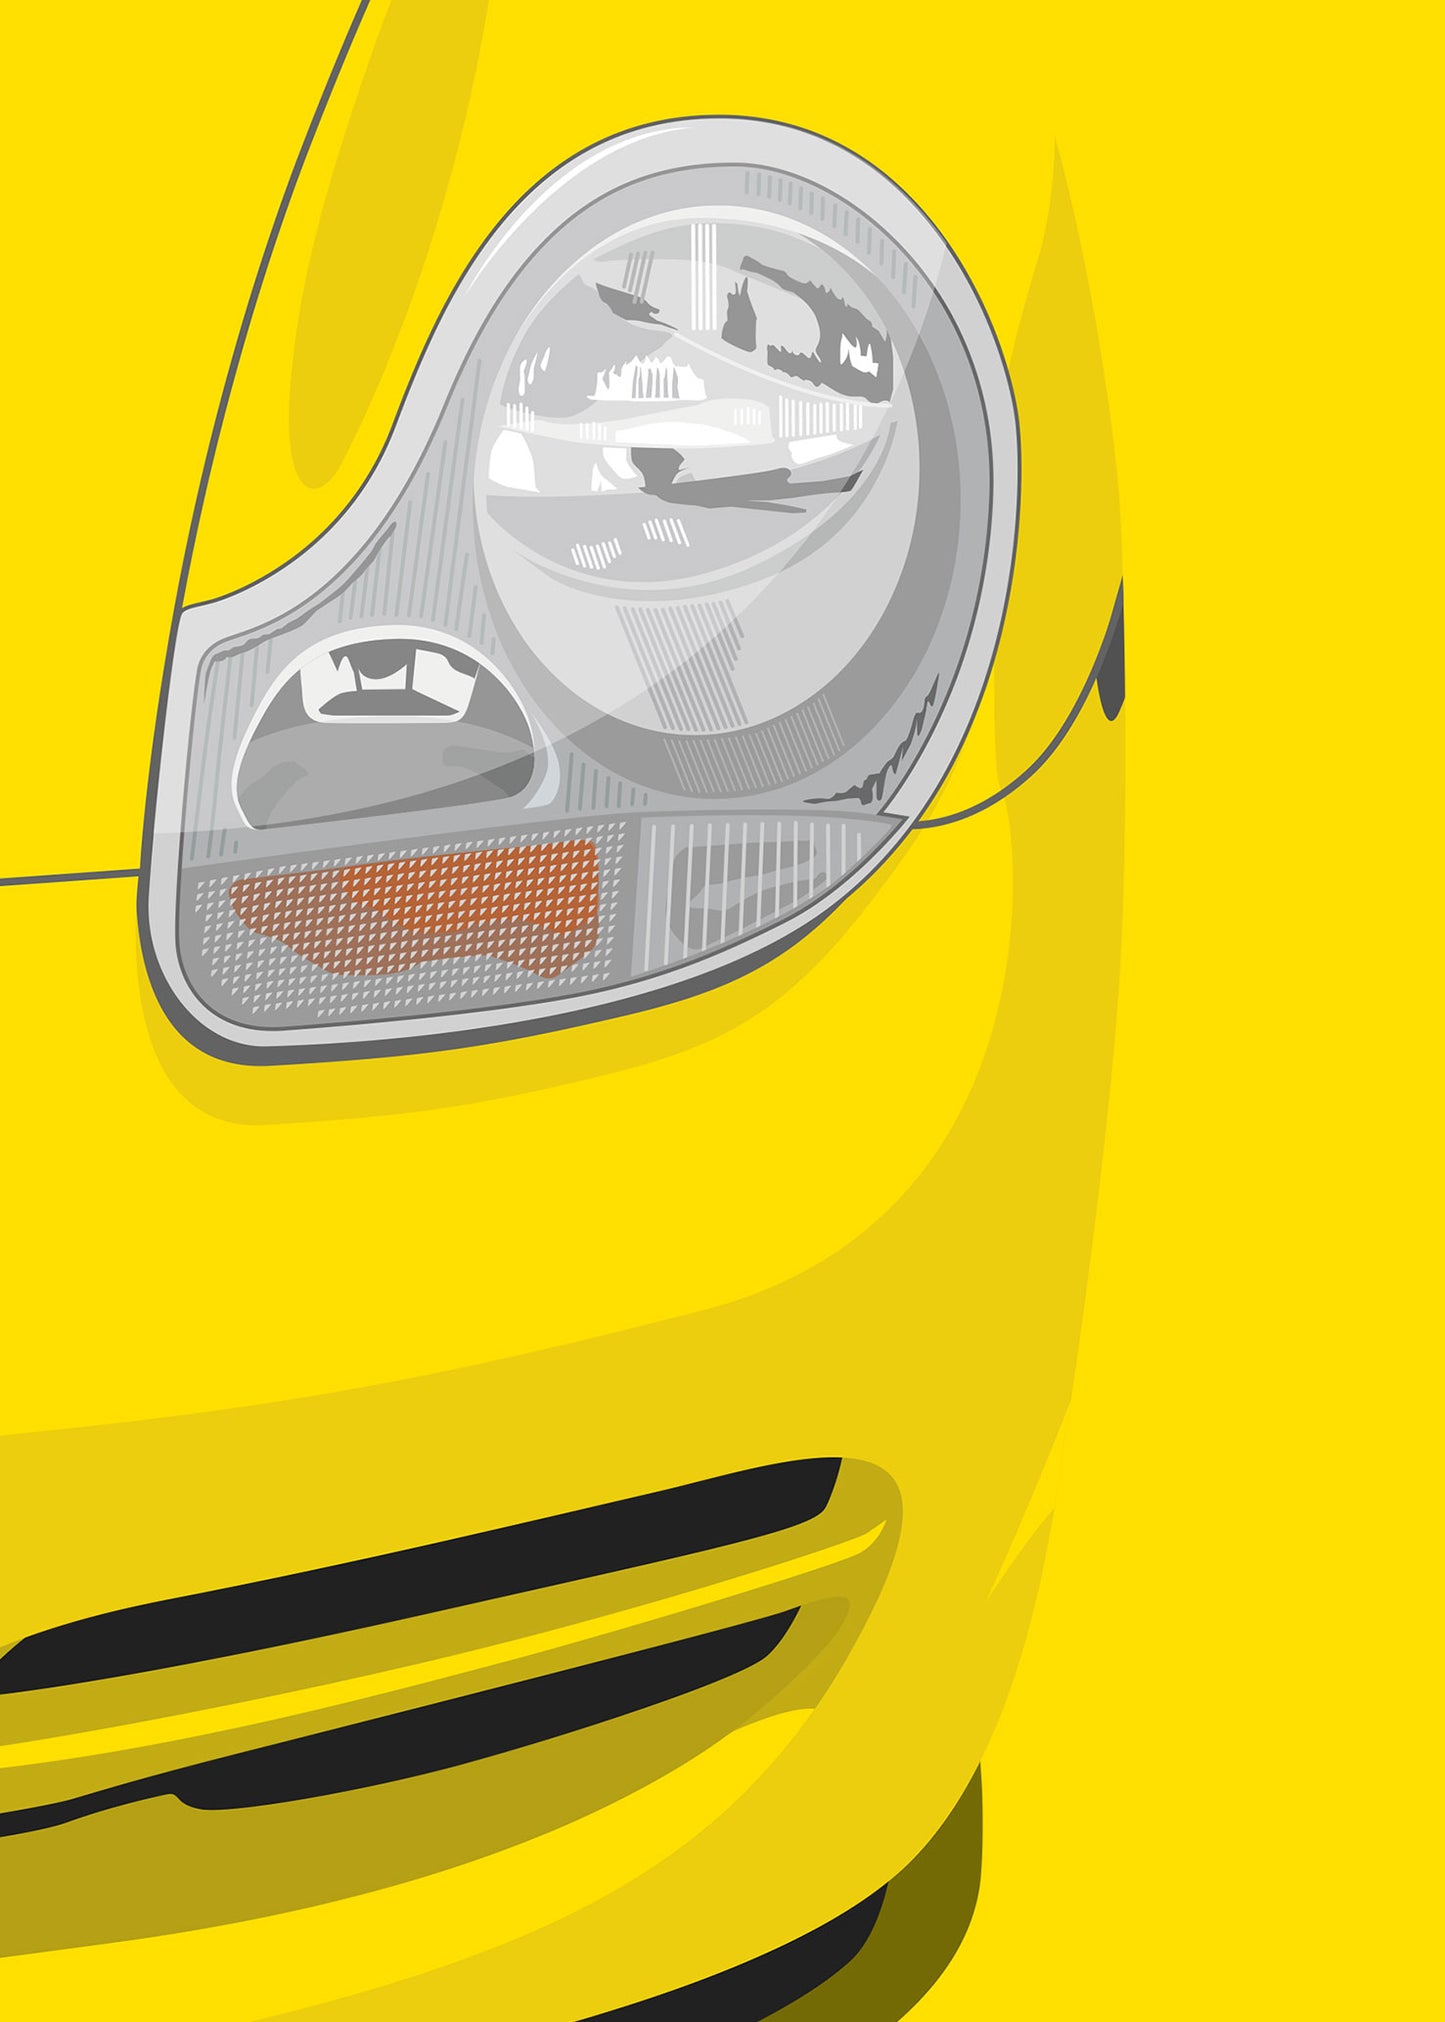 1997 Porsche 911 (996.1) Carrera Aerokit - Speed Yellow - poster print